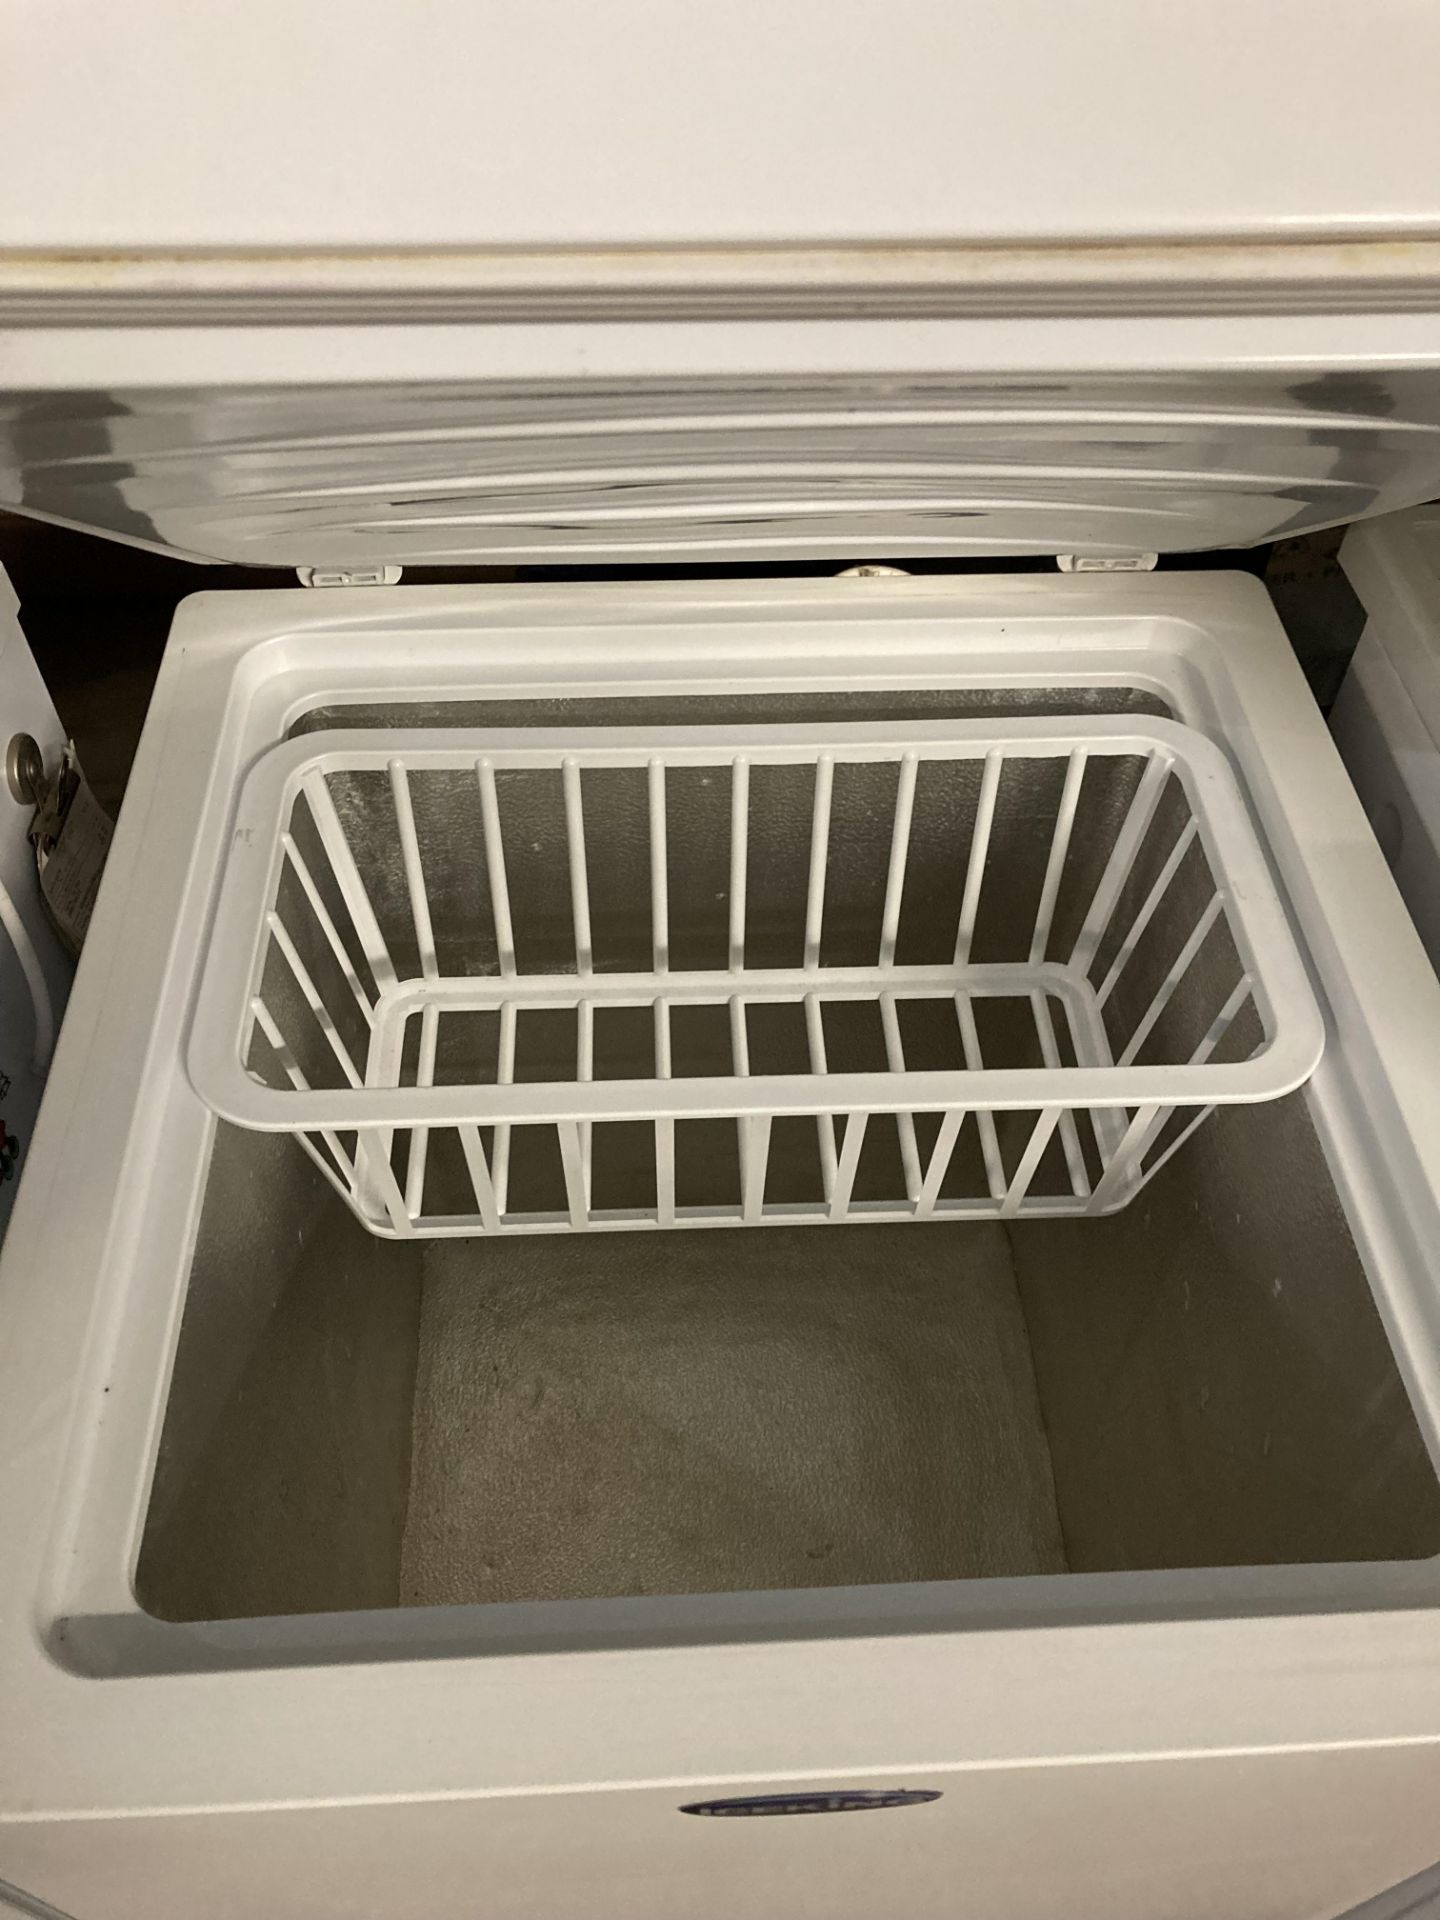 Iceking chest freezer modelL CFAP 100w 99L - 240v (saleroom location: PO) - Image 2 of 2